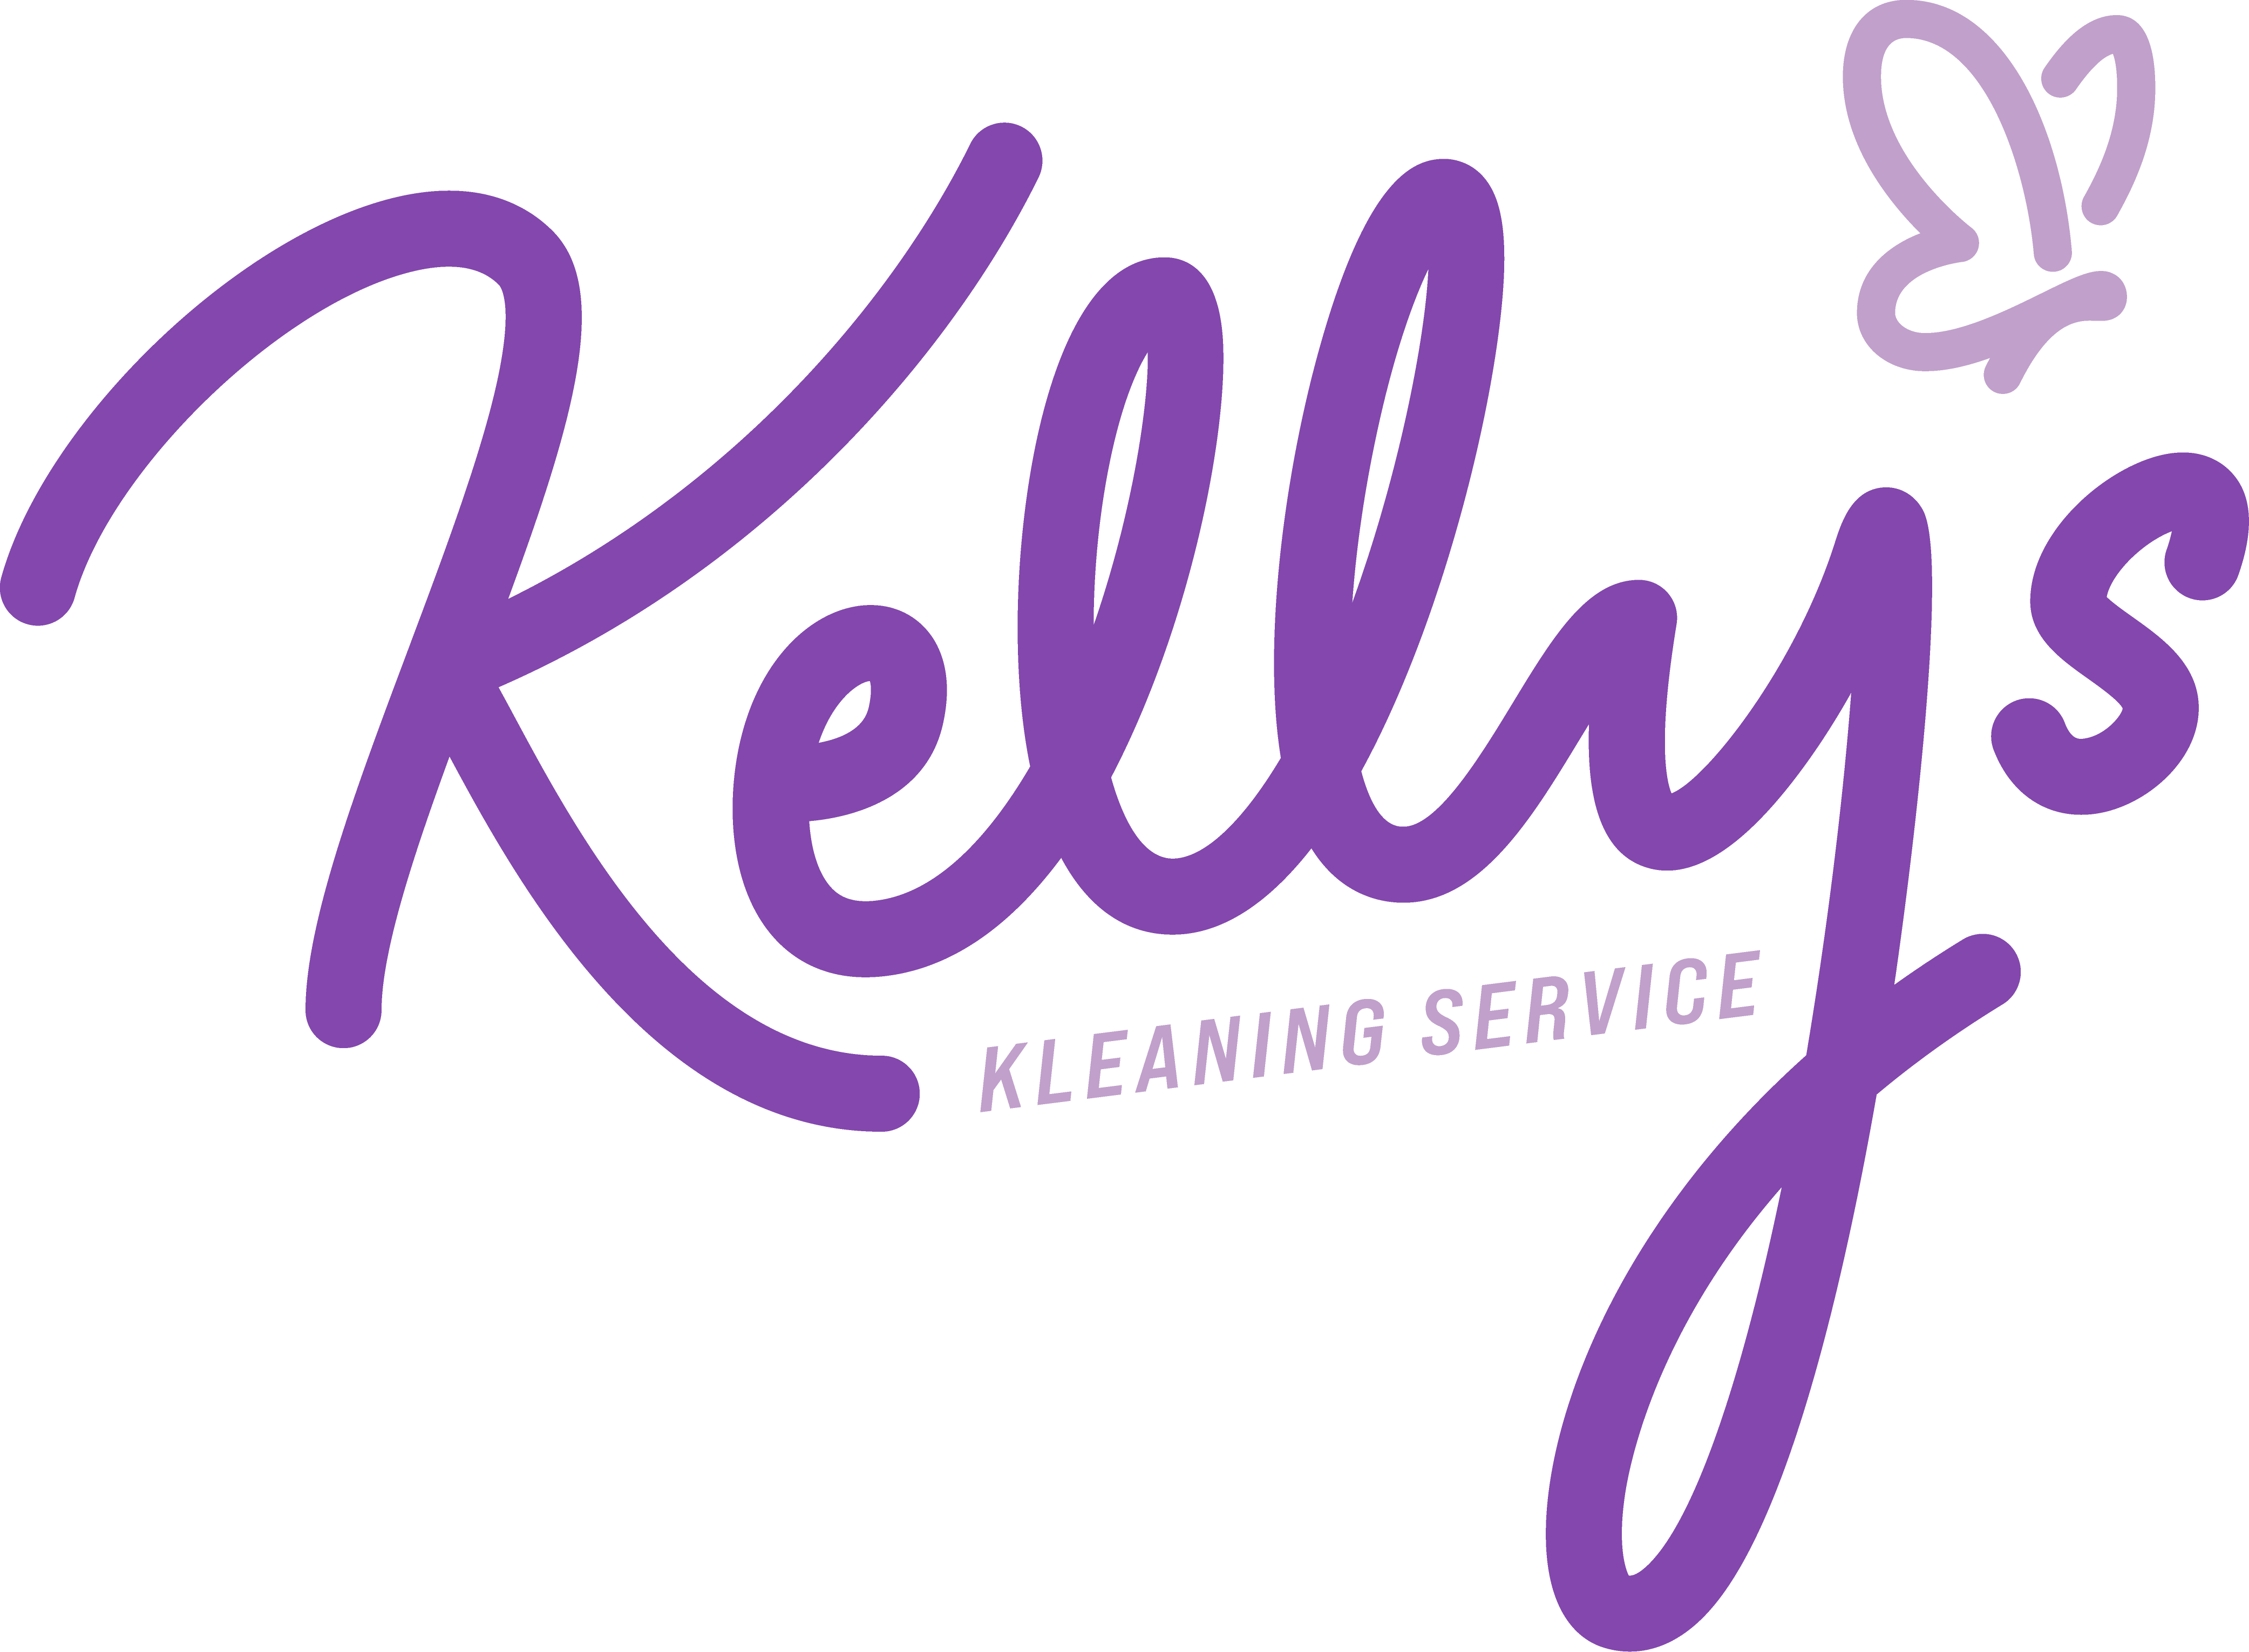 Kelly's Kleaning Service